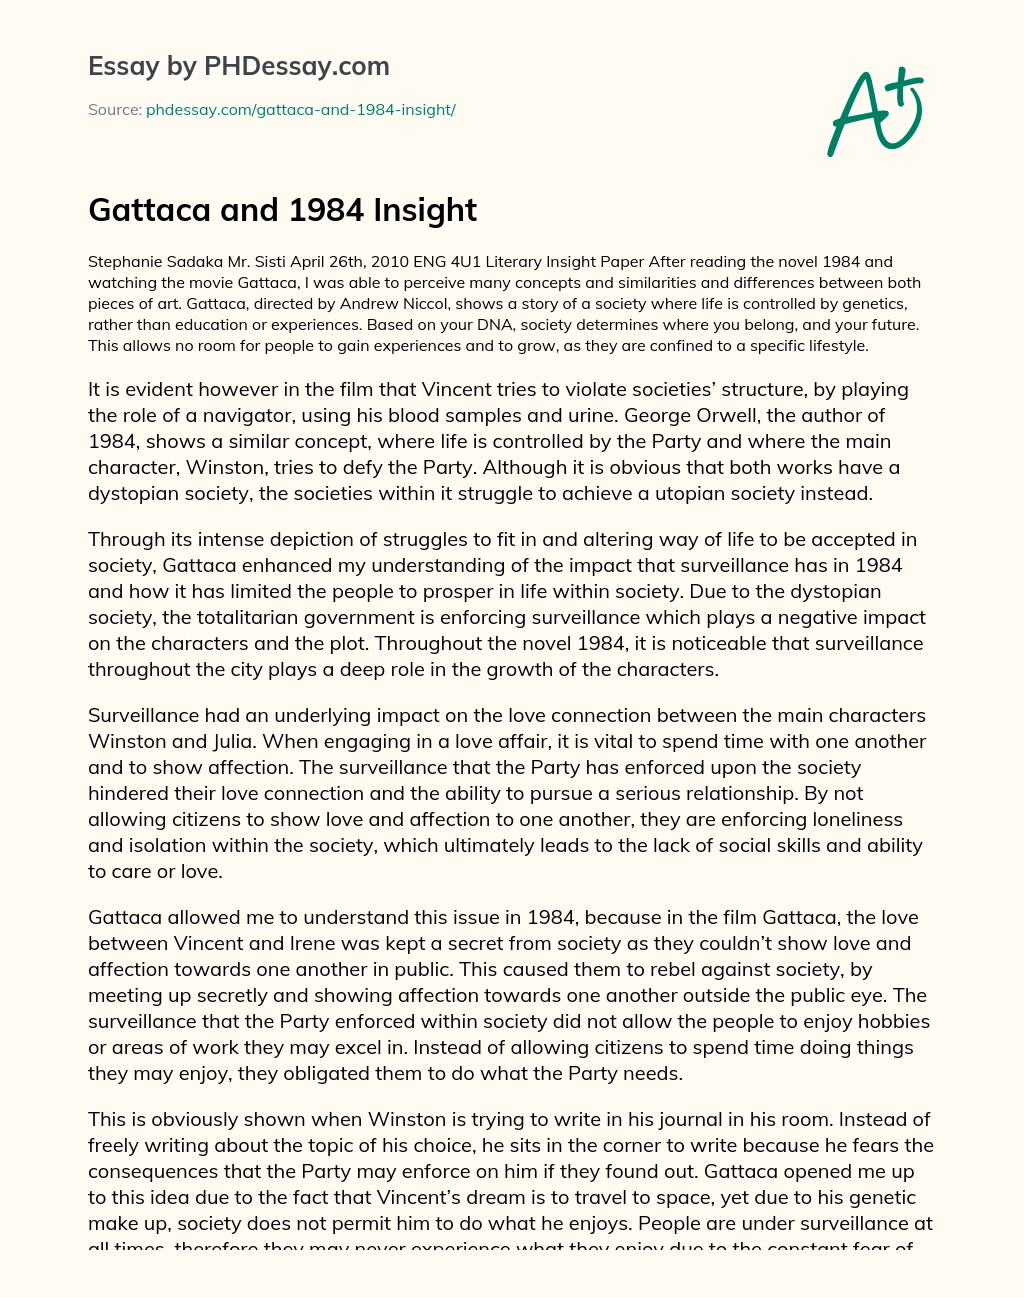 Gattaca and 1984 Insight essay